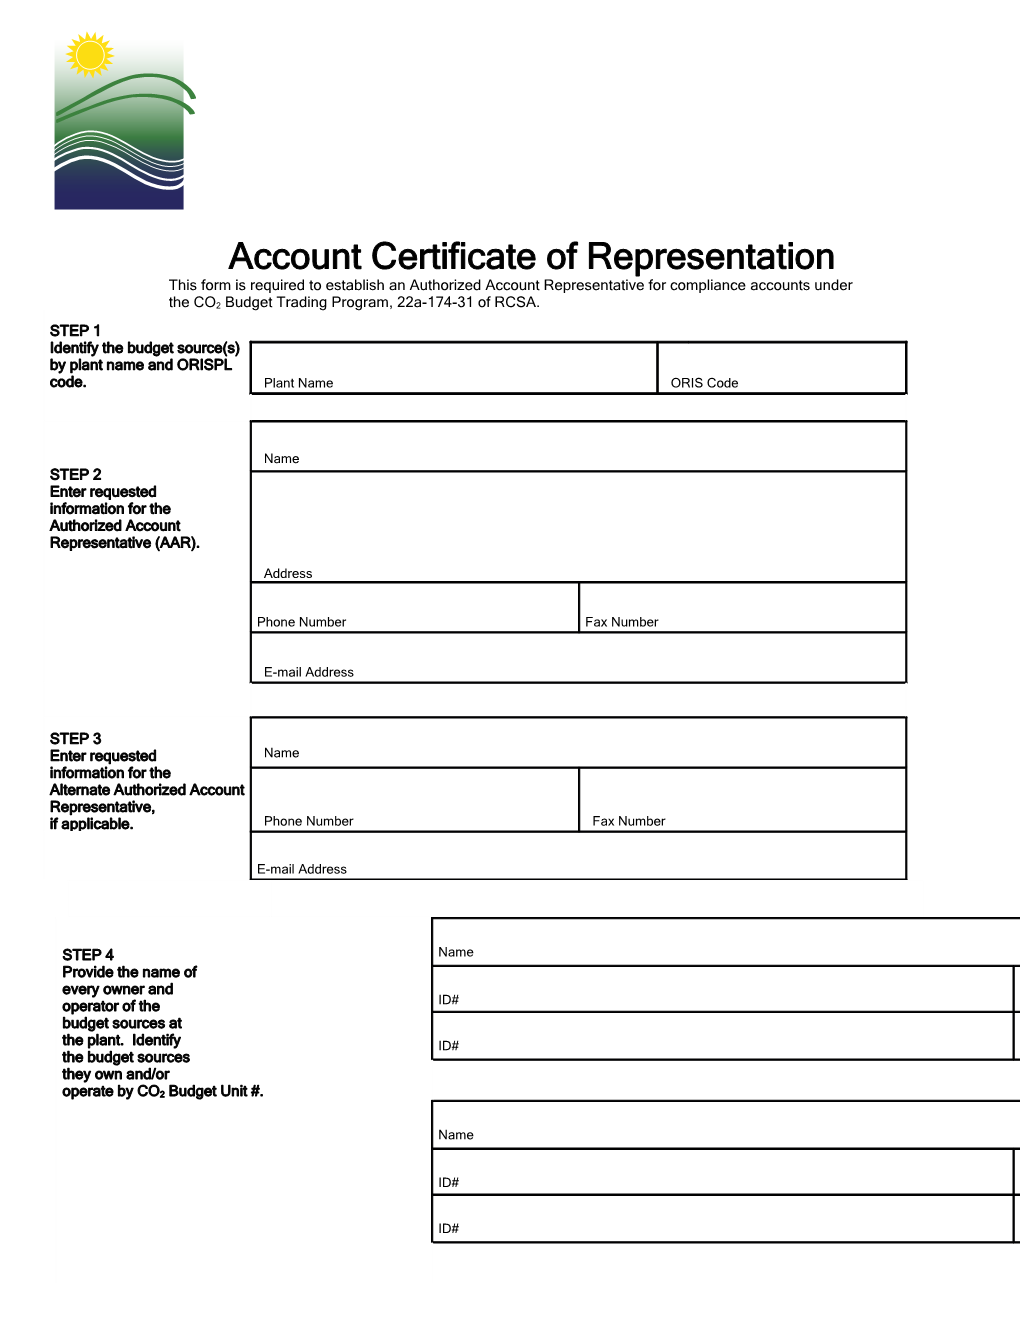 Account Certificate of Representation